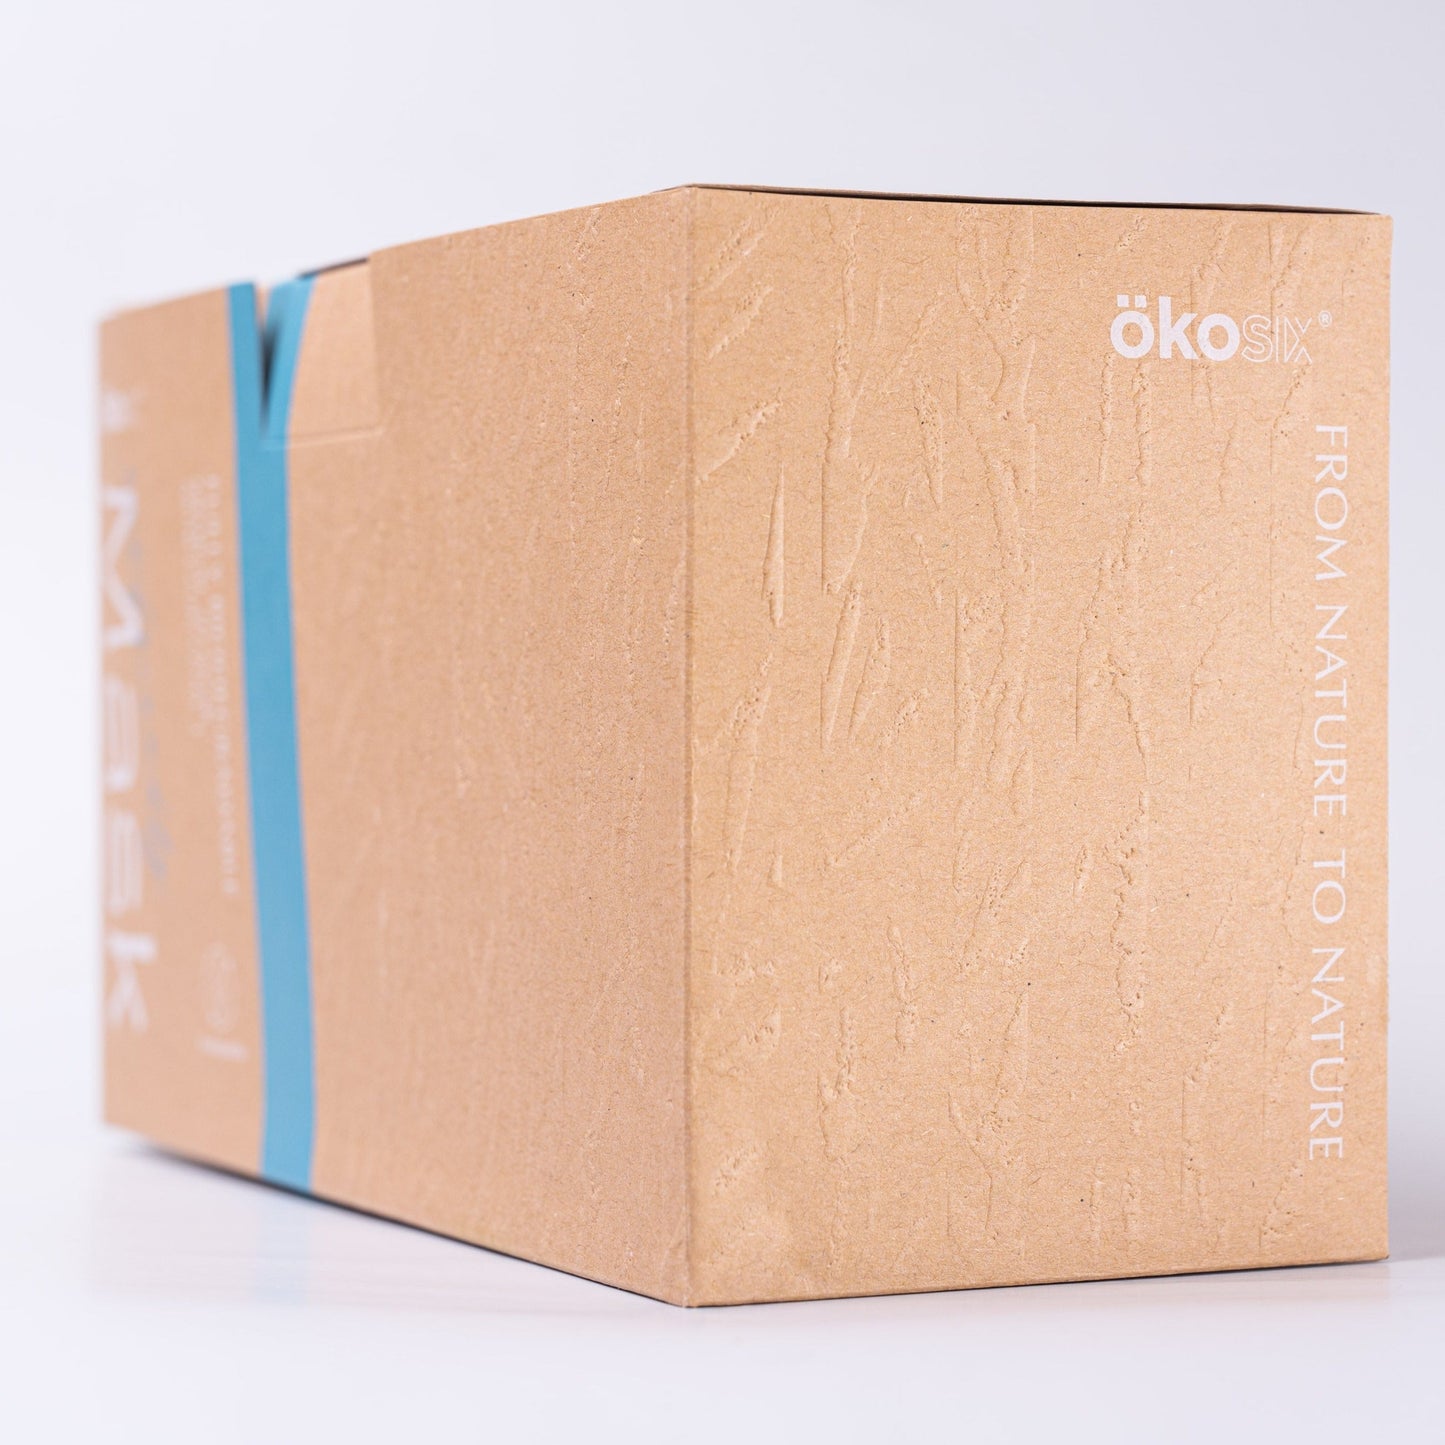 ÖKOSIX® 可完全生物降解Level 3口罩 兒童S碼 白色 36個裝